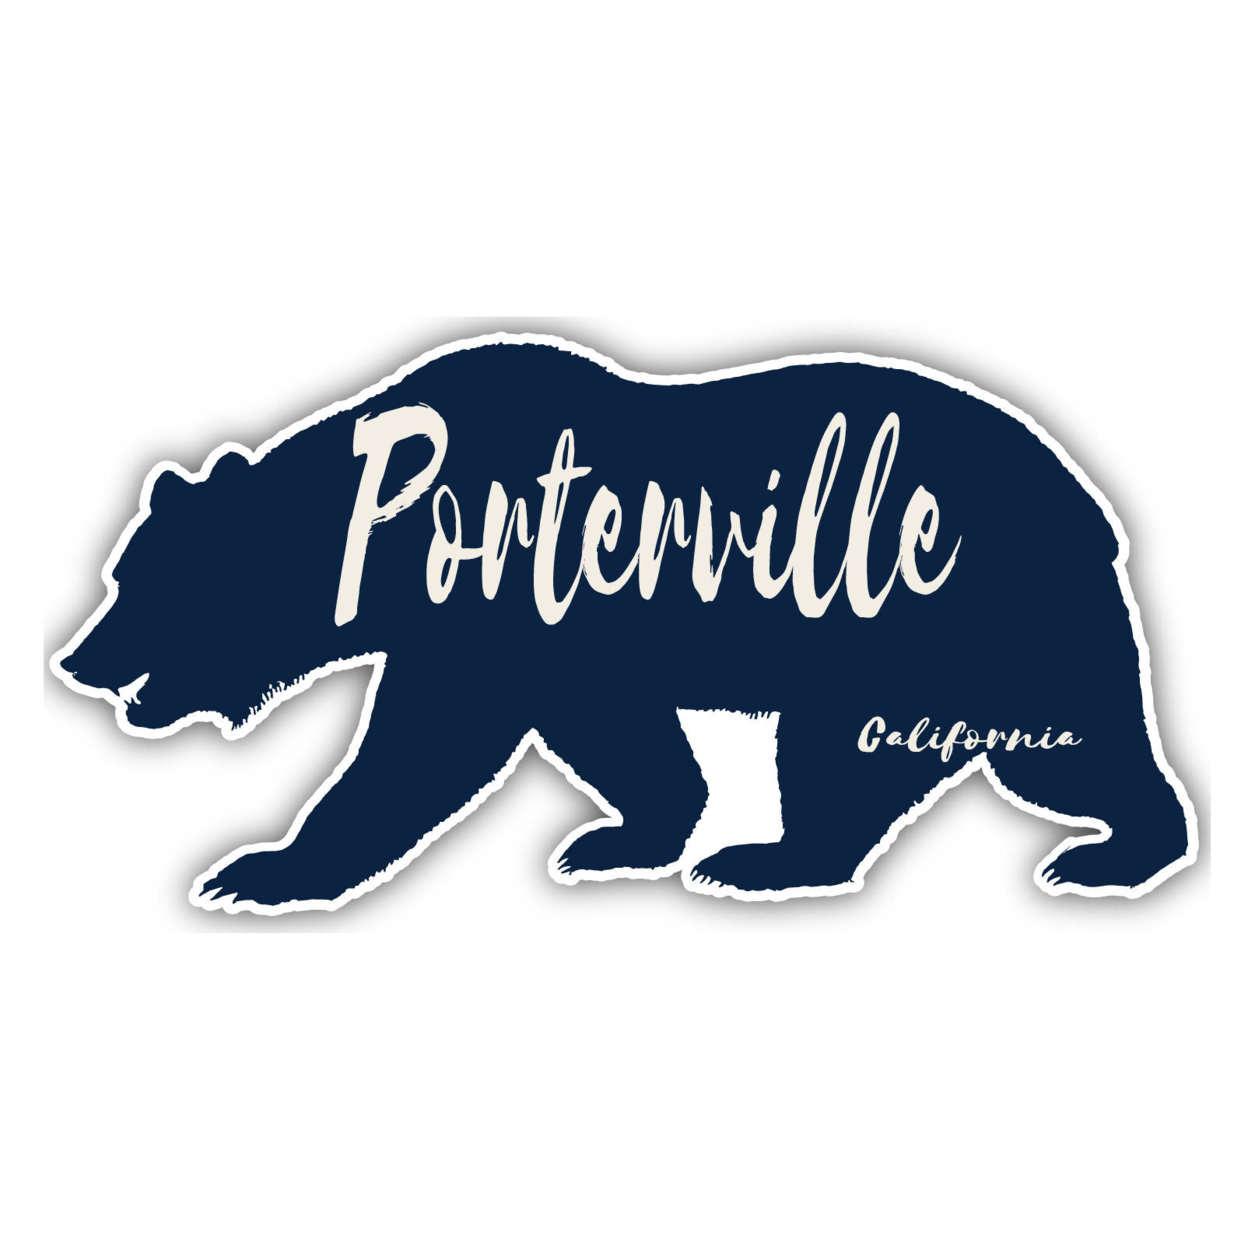 Porterville California Souvenir Decorative Stickers (Choose Theme And Size) - Single Unit, 4-Inch, Adventures Awaits